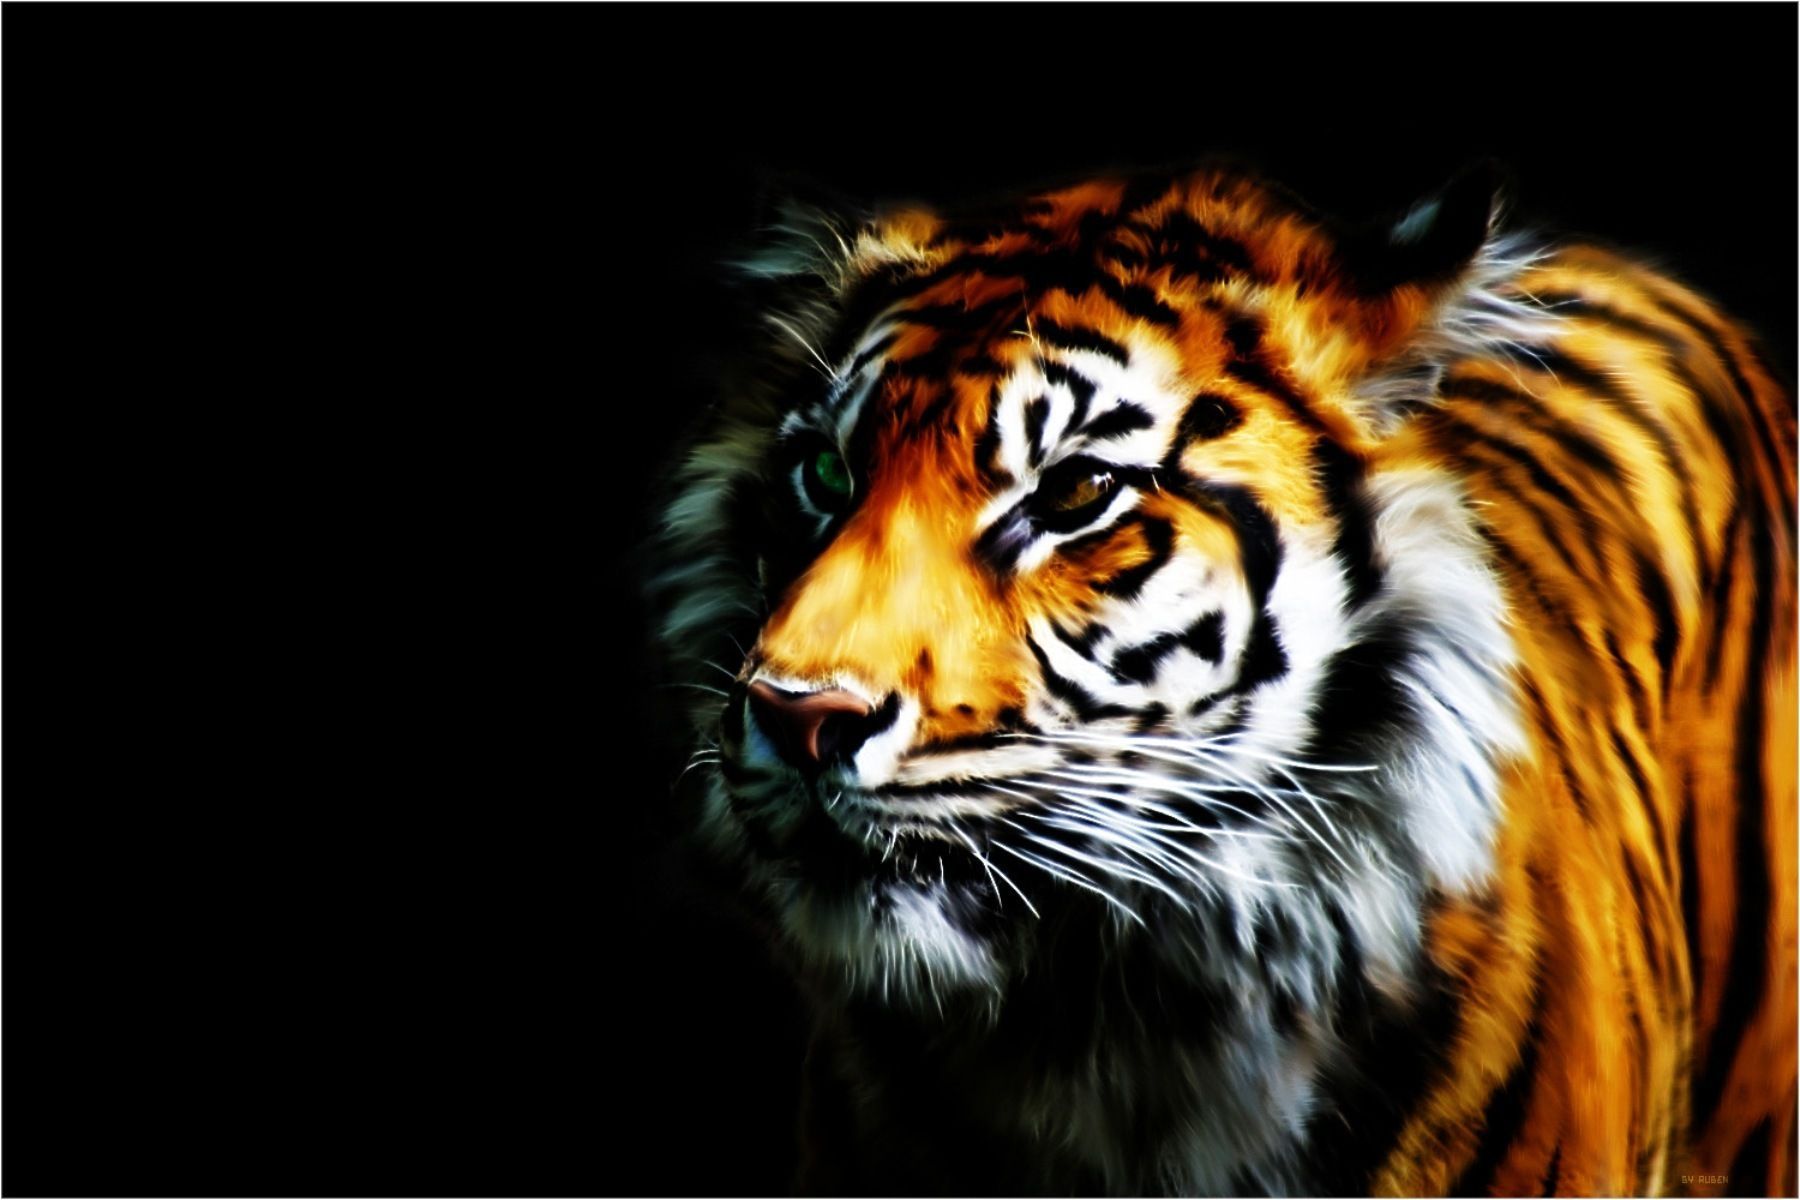 Cool Tiger HD Wallpaper. Tiger image, Tiger picture